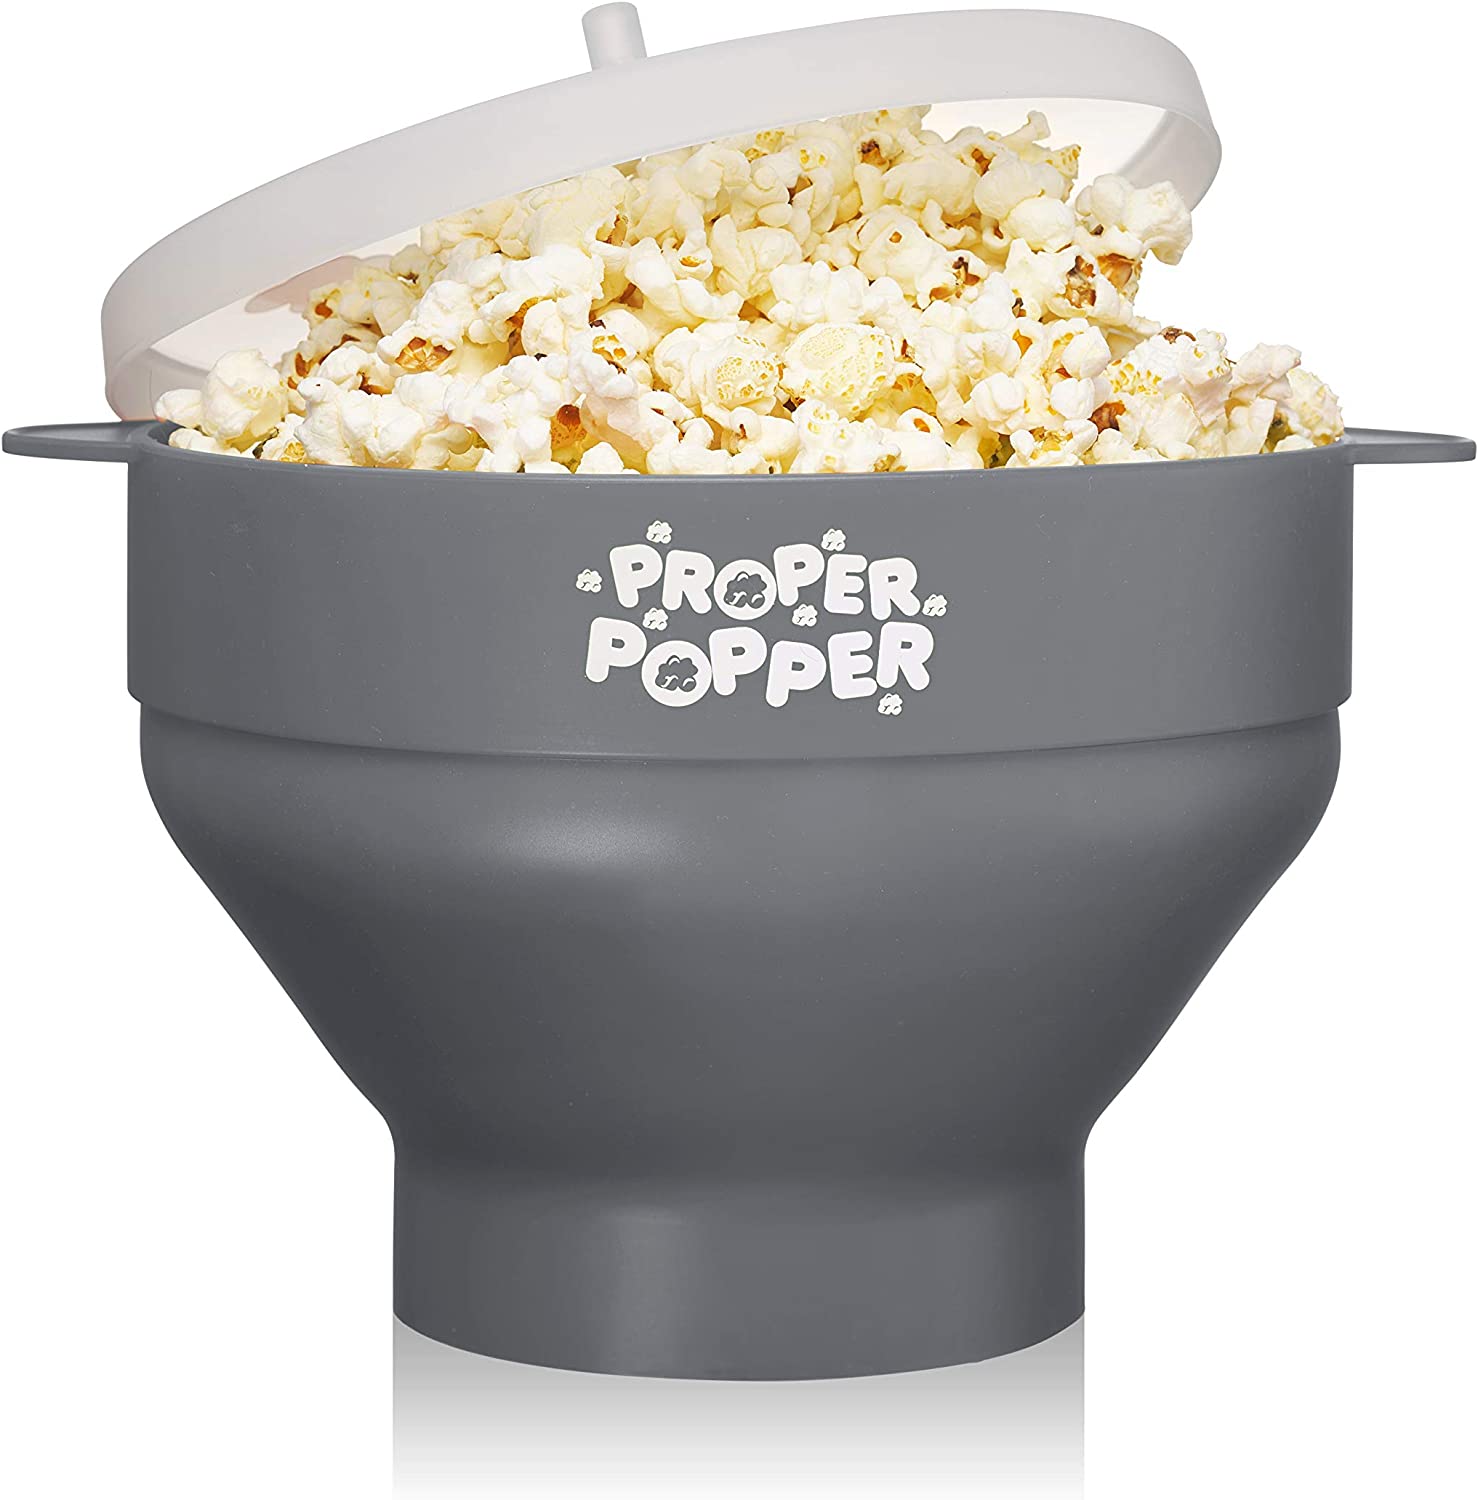 PROPER POPPER Lightweight Easy Clean Popcorn Maker